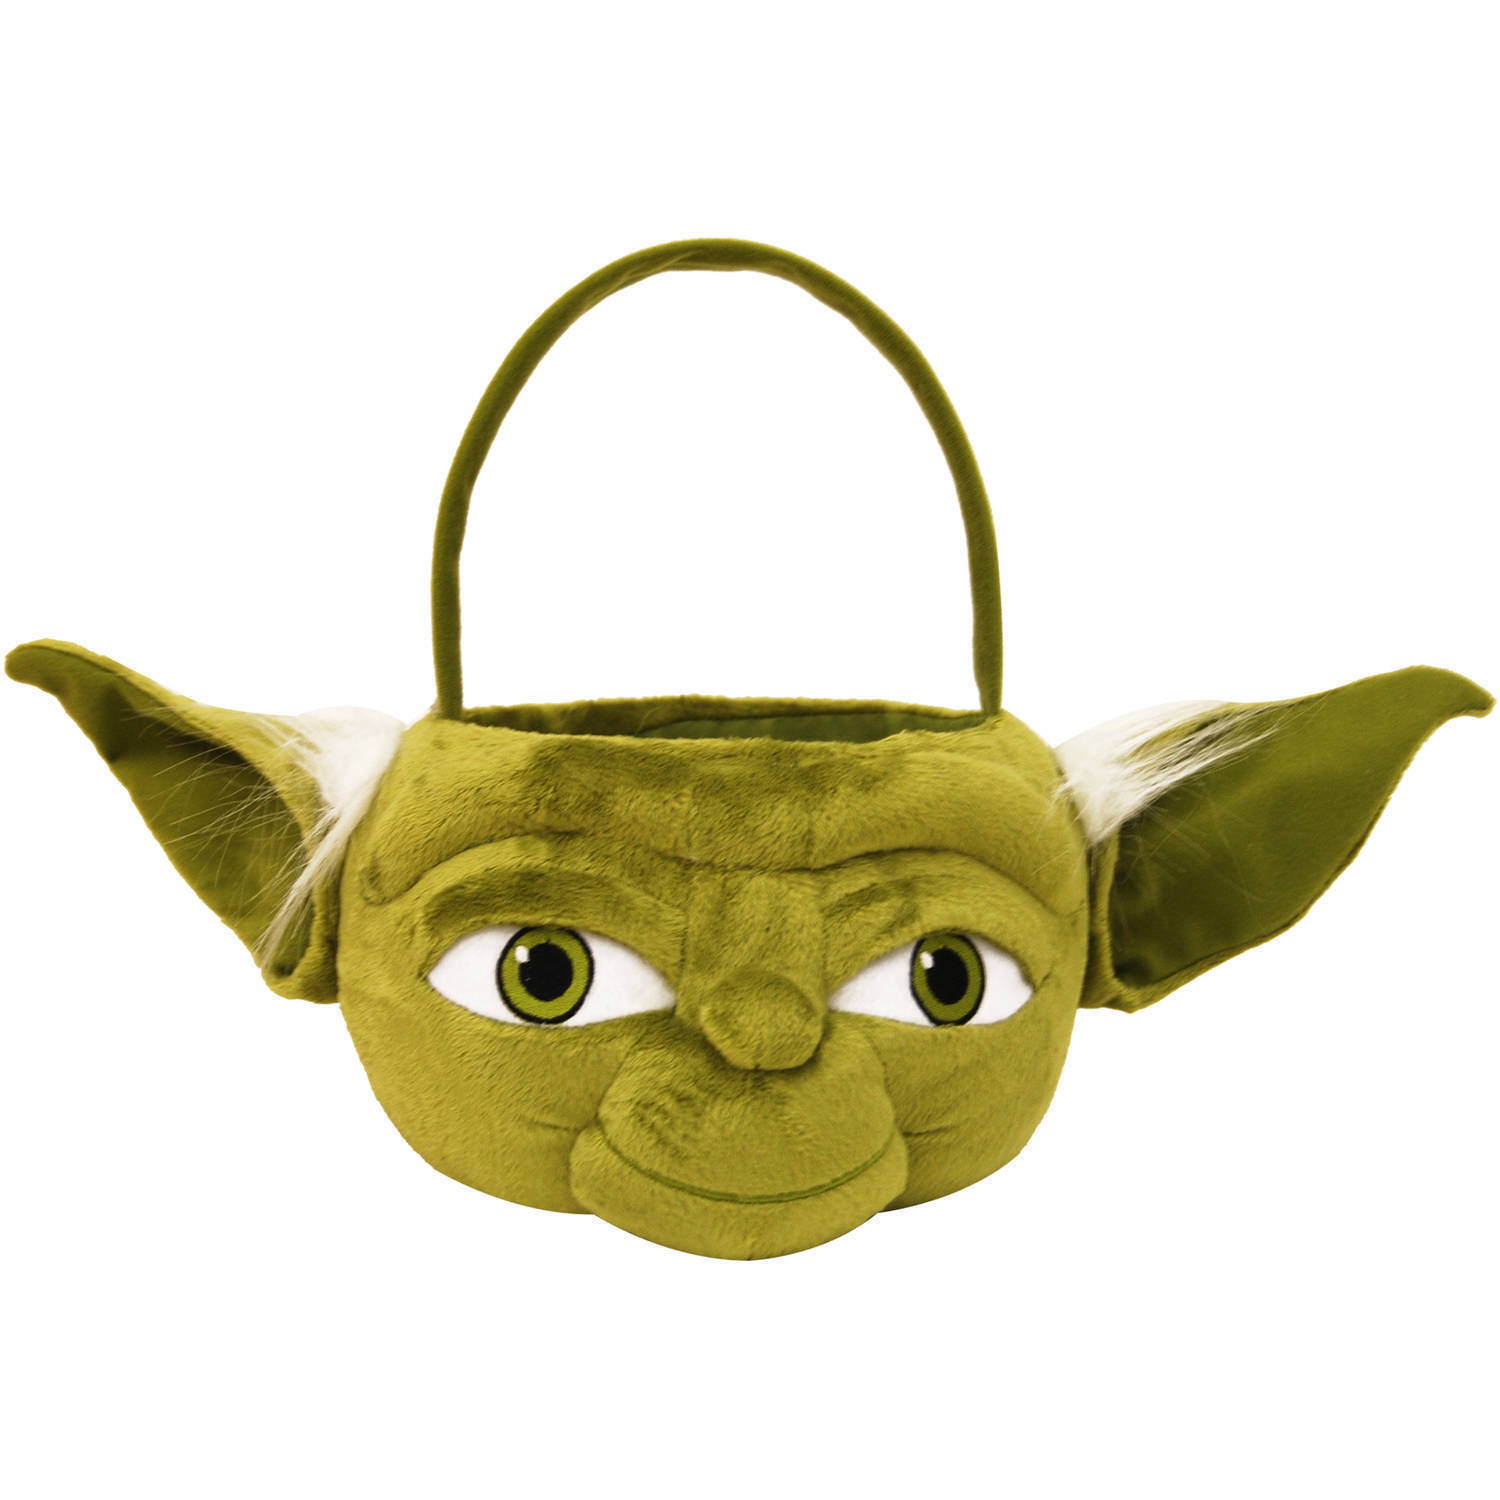 Star Wars Yoda Plush Basket Medium Personalized Easter Egg Hunt Baskets